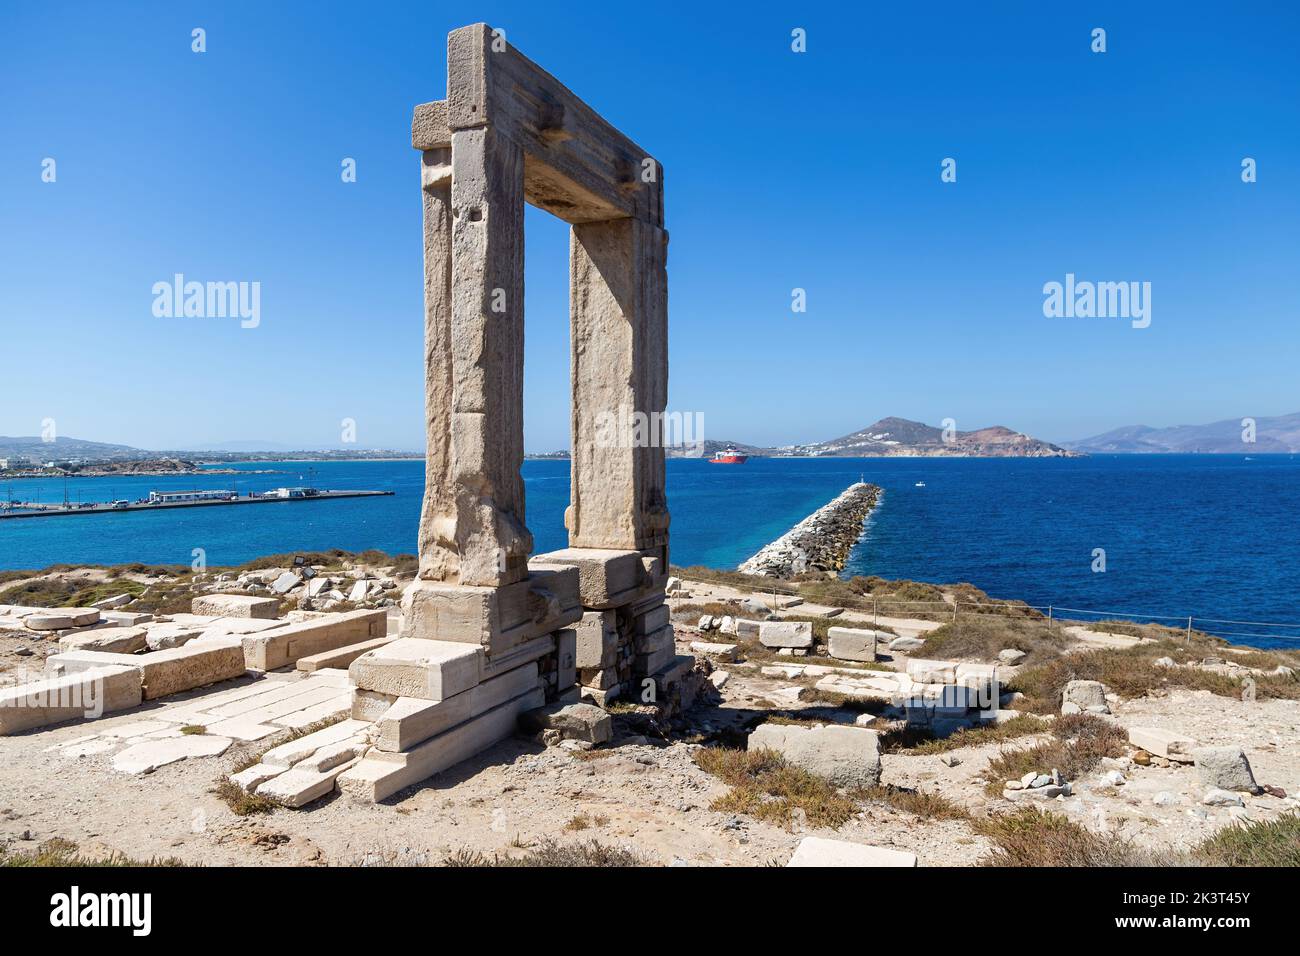 Naxos island, Temple of Apollo, Cyclades Greece. Portara, marble pillars gate on islet of Palatia, sunny day, calm sea, harbor, blue sky Stock Photo